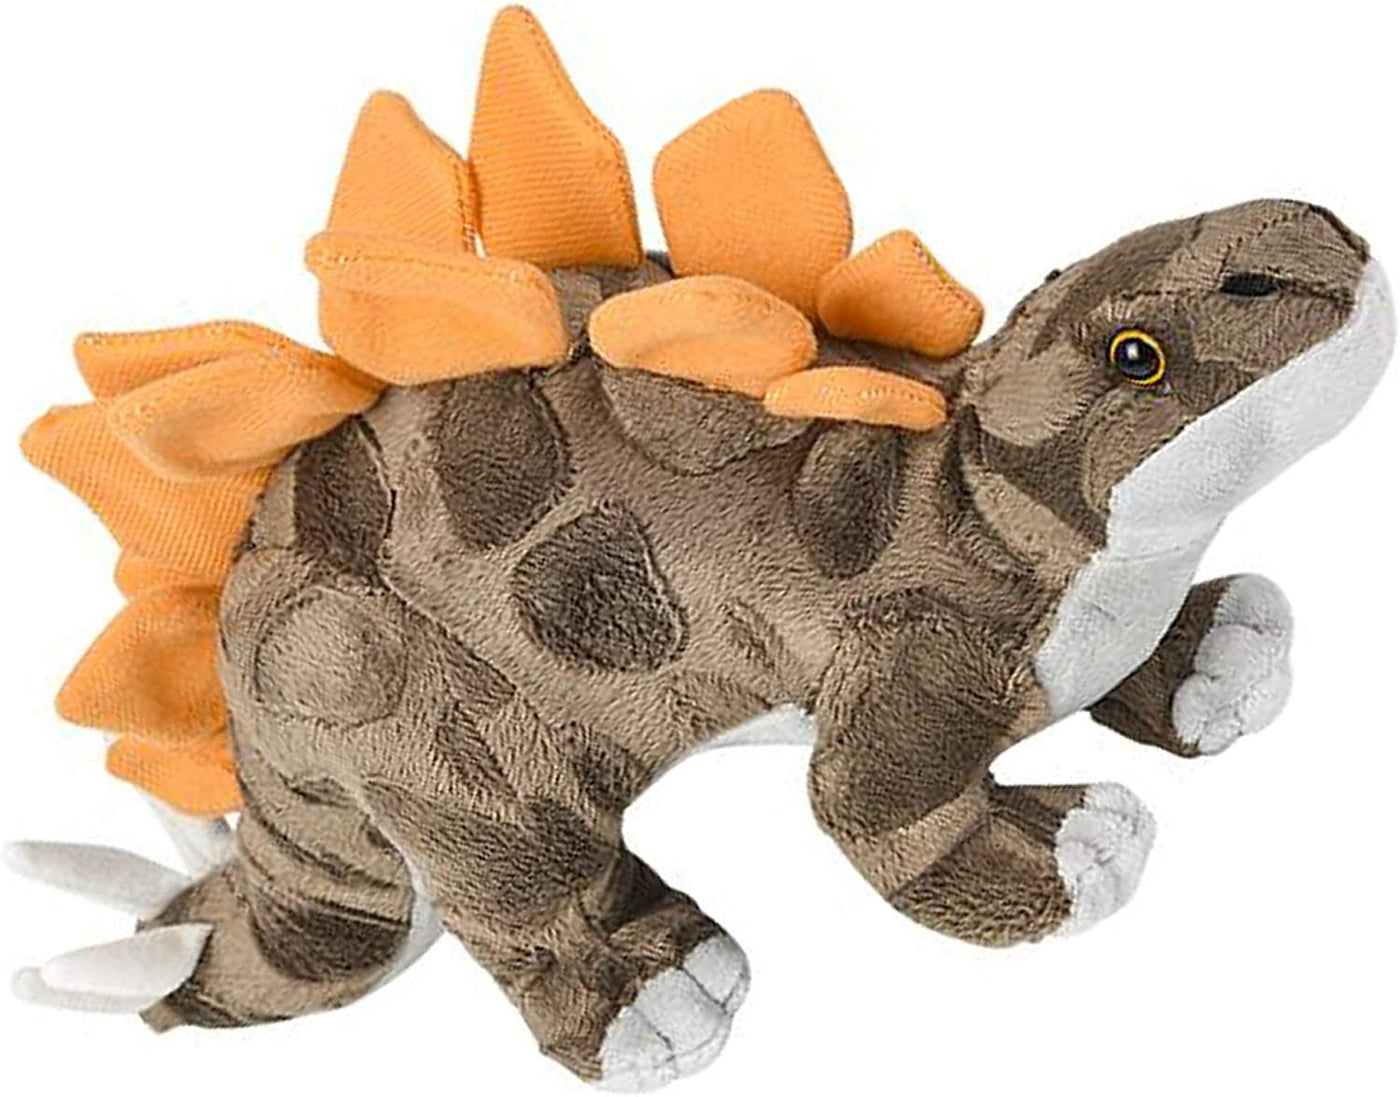 ArtCreativity 14 Inch Cozy Stegosaurus Plush Dinosaur Toy - Soft and Cuddly Stuffed Animal for Kids - Cute Nursery Decor - Carnival Prize - Best Gift for Baby Shower, Boys, Girls